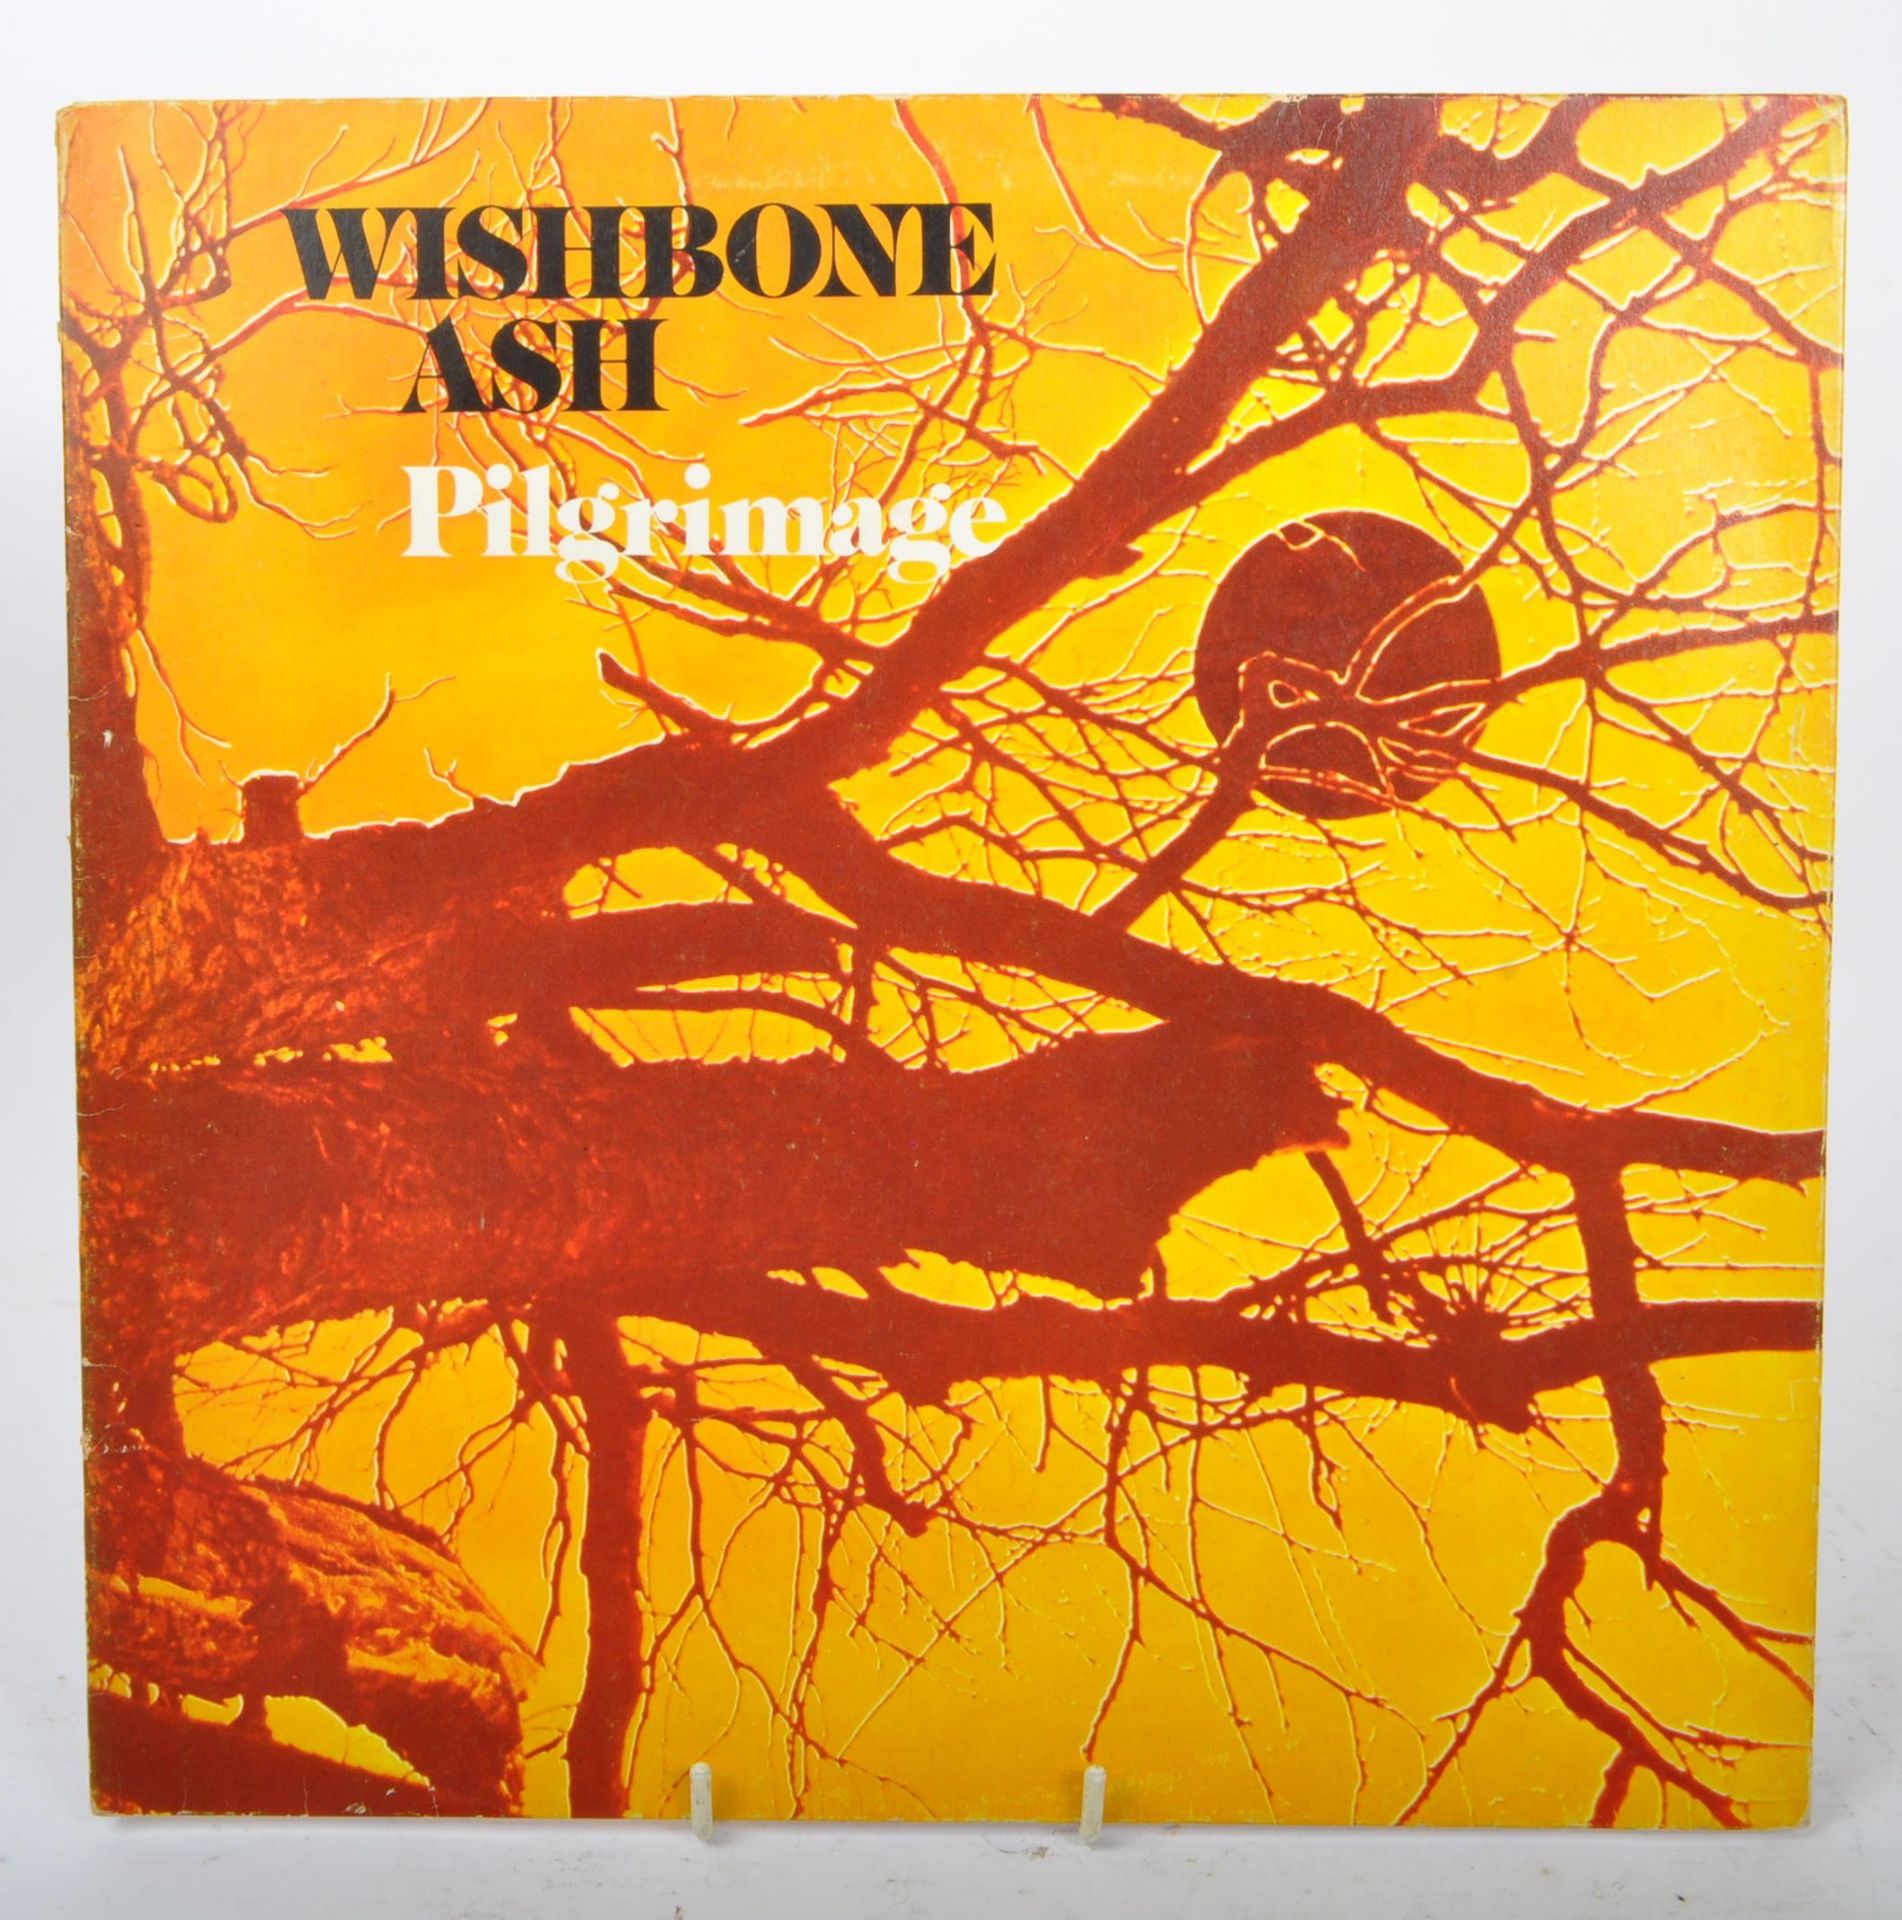 LONG PLAY 33 RPM VINYL WISHBONE ASH RECORD ALBUMS COLLECTION - Bild 4 aus 5